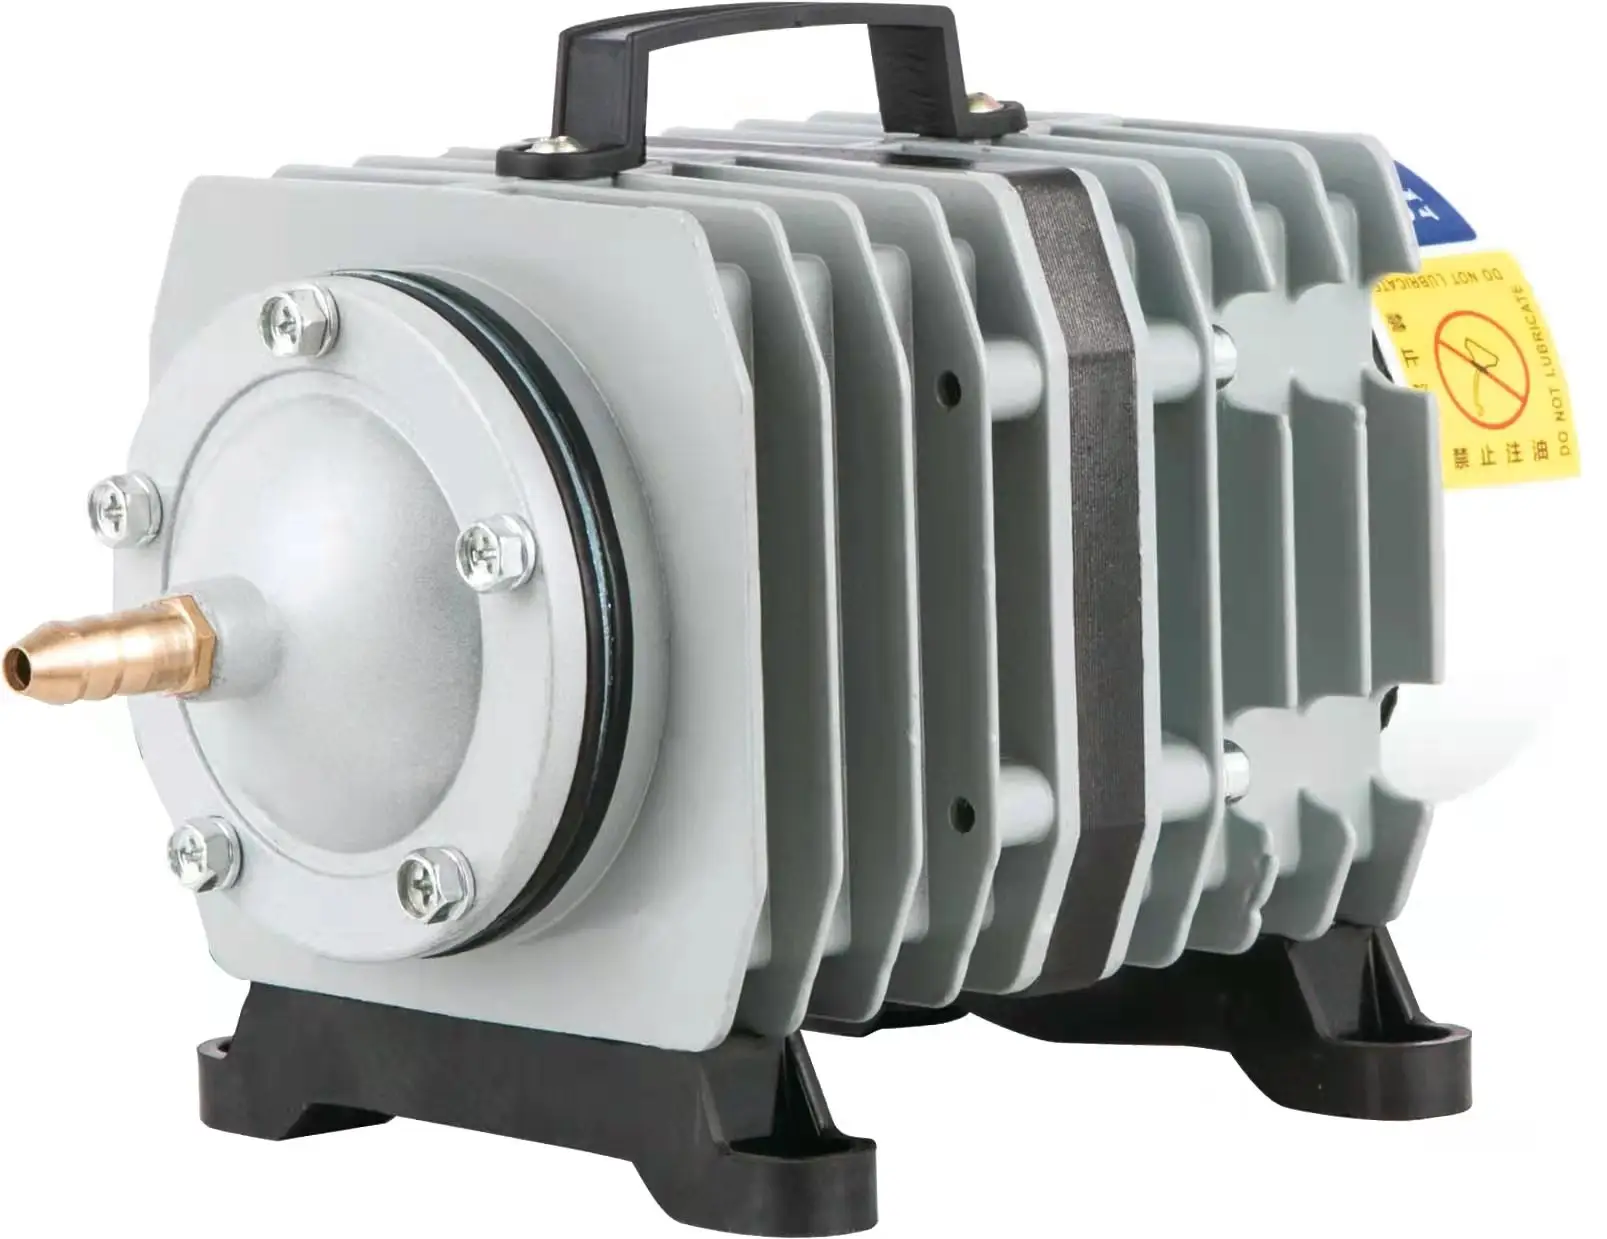 2023 Hot Selling 55w Multifunction Oxygen Aerator Air Compressor Aquarium Pump For Fish Koi Tank